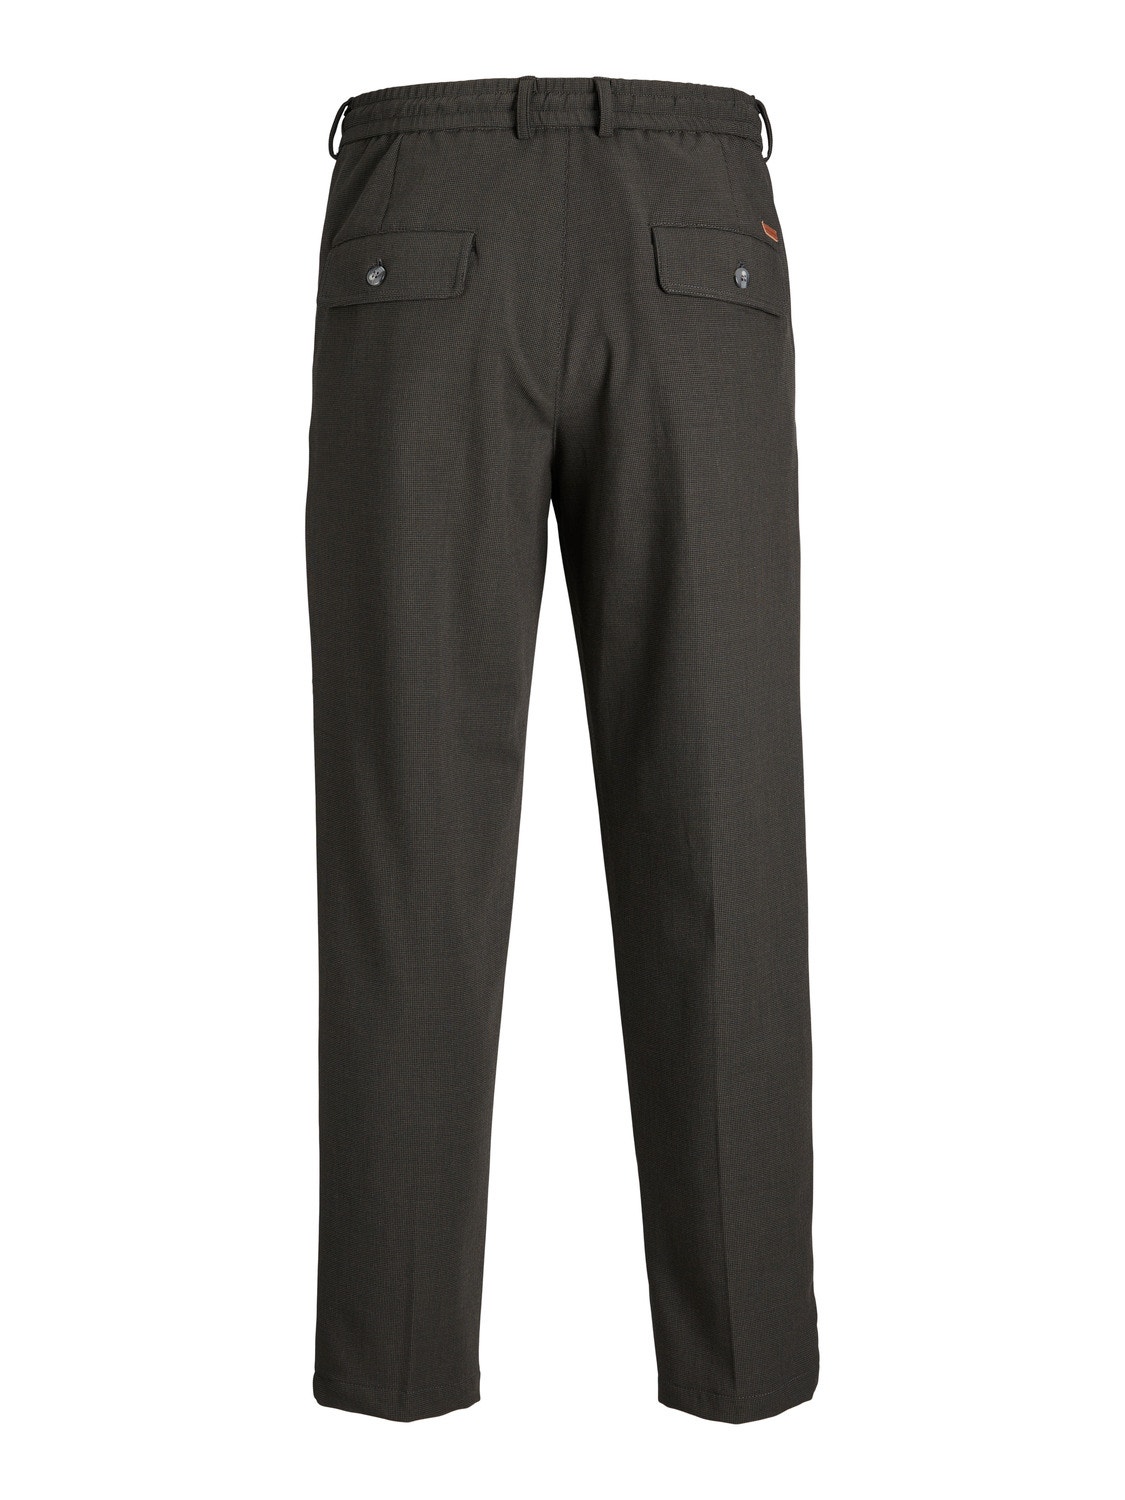 Jack & Jones Wide Fit Spodnie chino -Seal Brown - 12216758